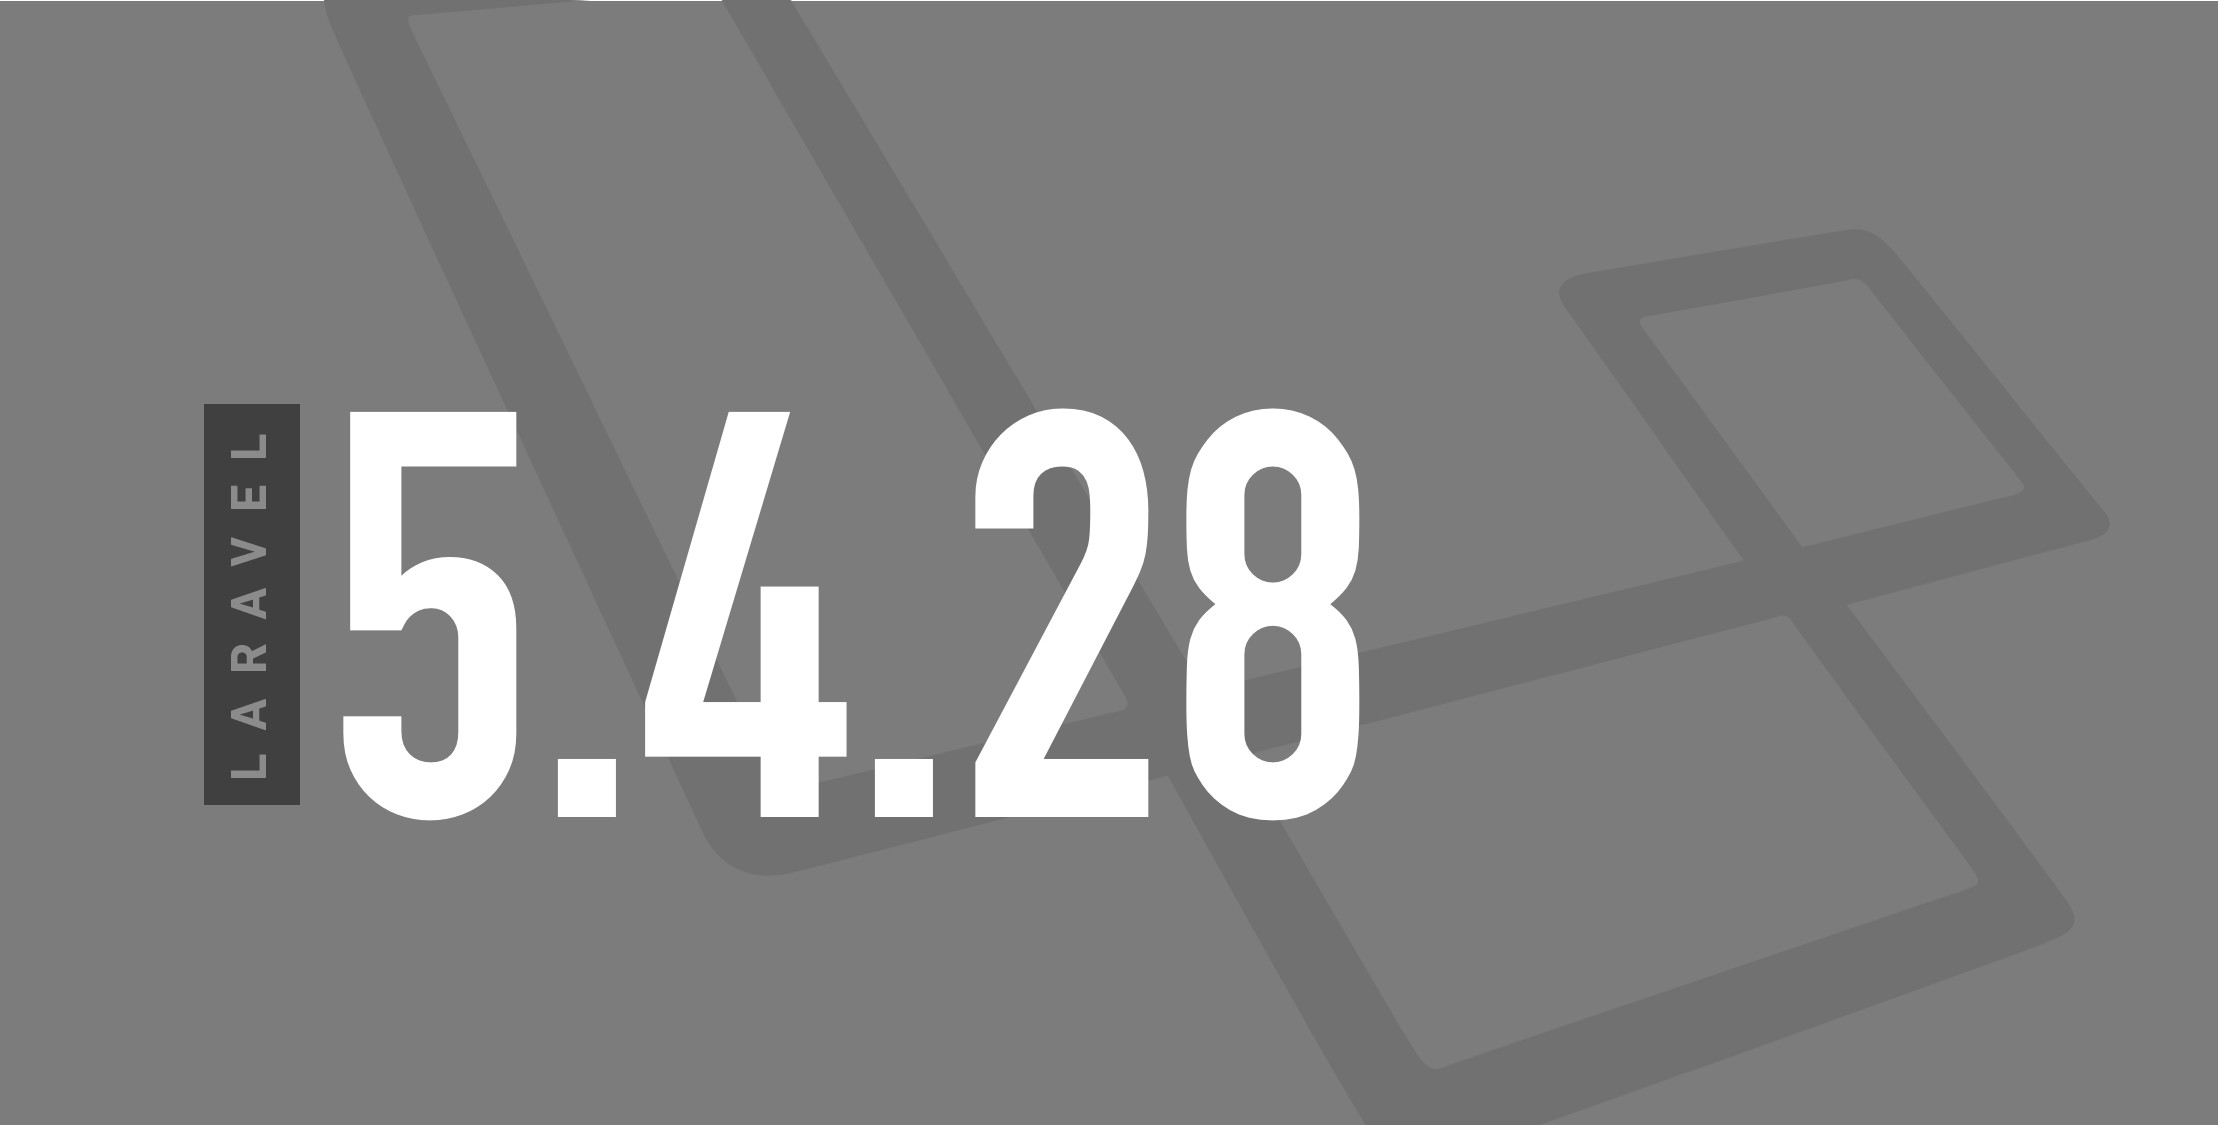 Laravel V5.4.28 is now released image